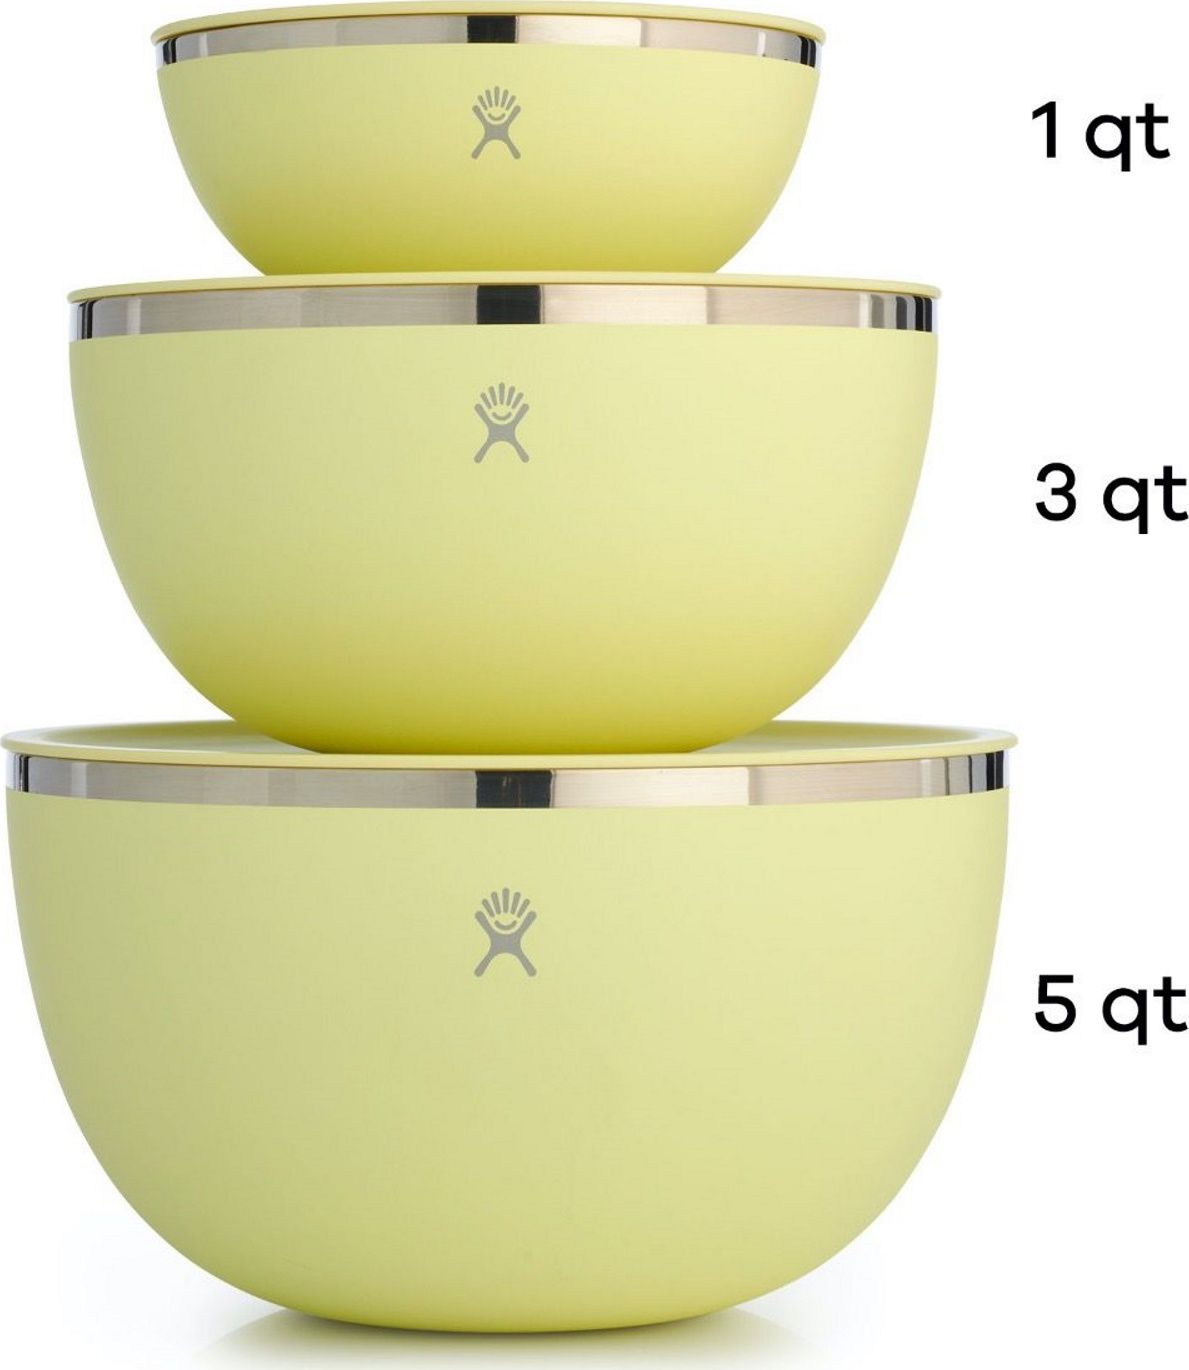 https://www.fjellsport.no/assets/blobs/hydro-flask-serving-bowl-with-lid-3qt-2839ml-upload-a8ff03046c.jpeg?preset=medium&dpr=2